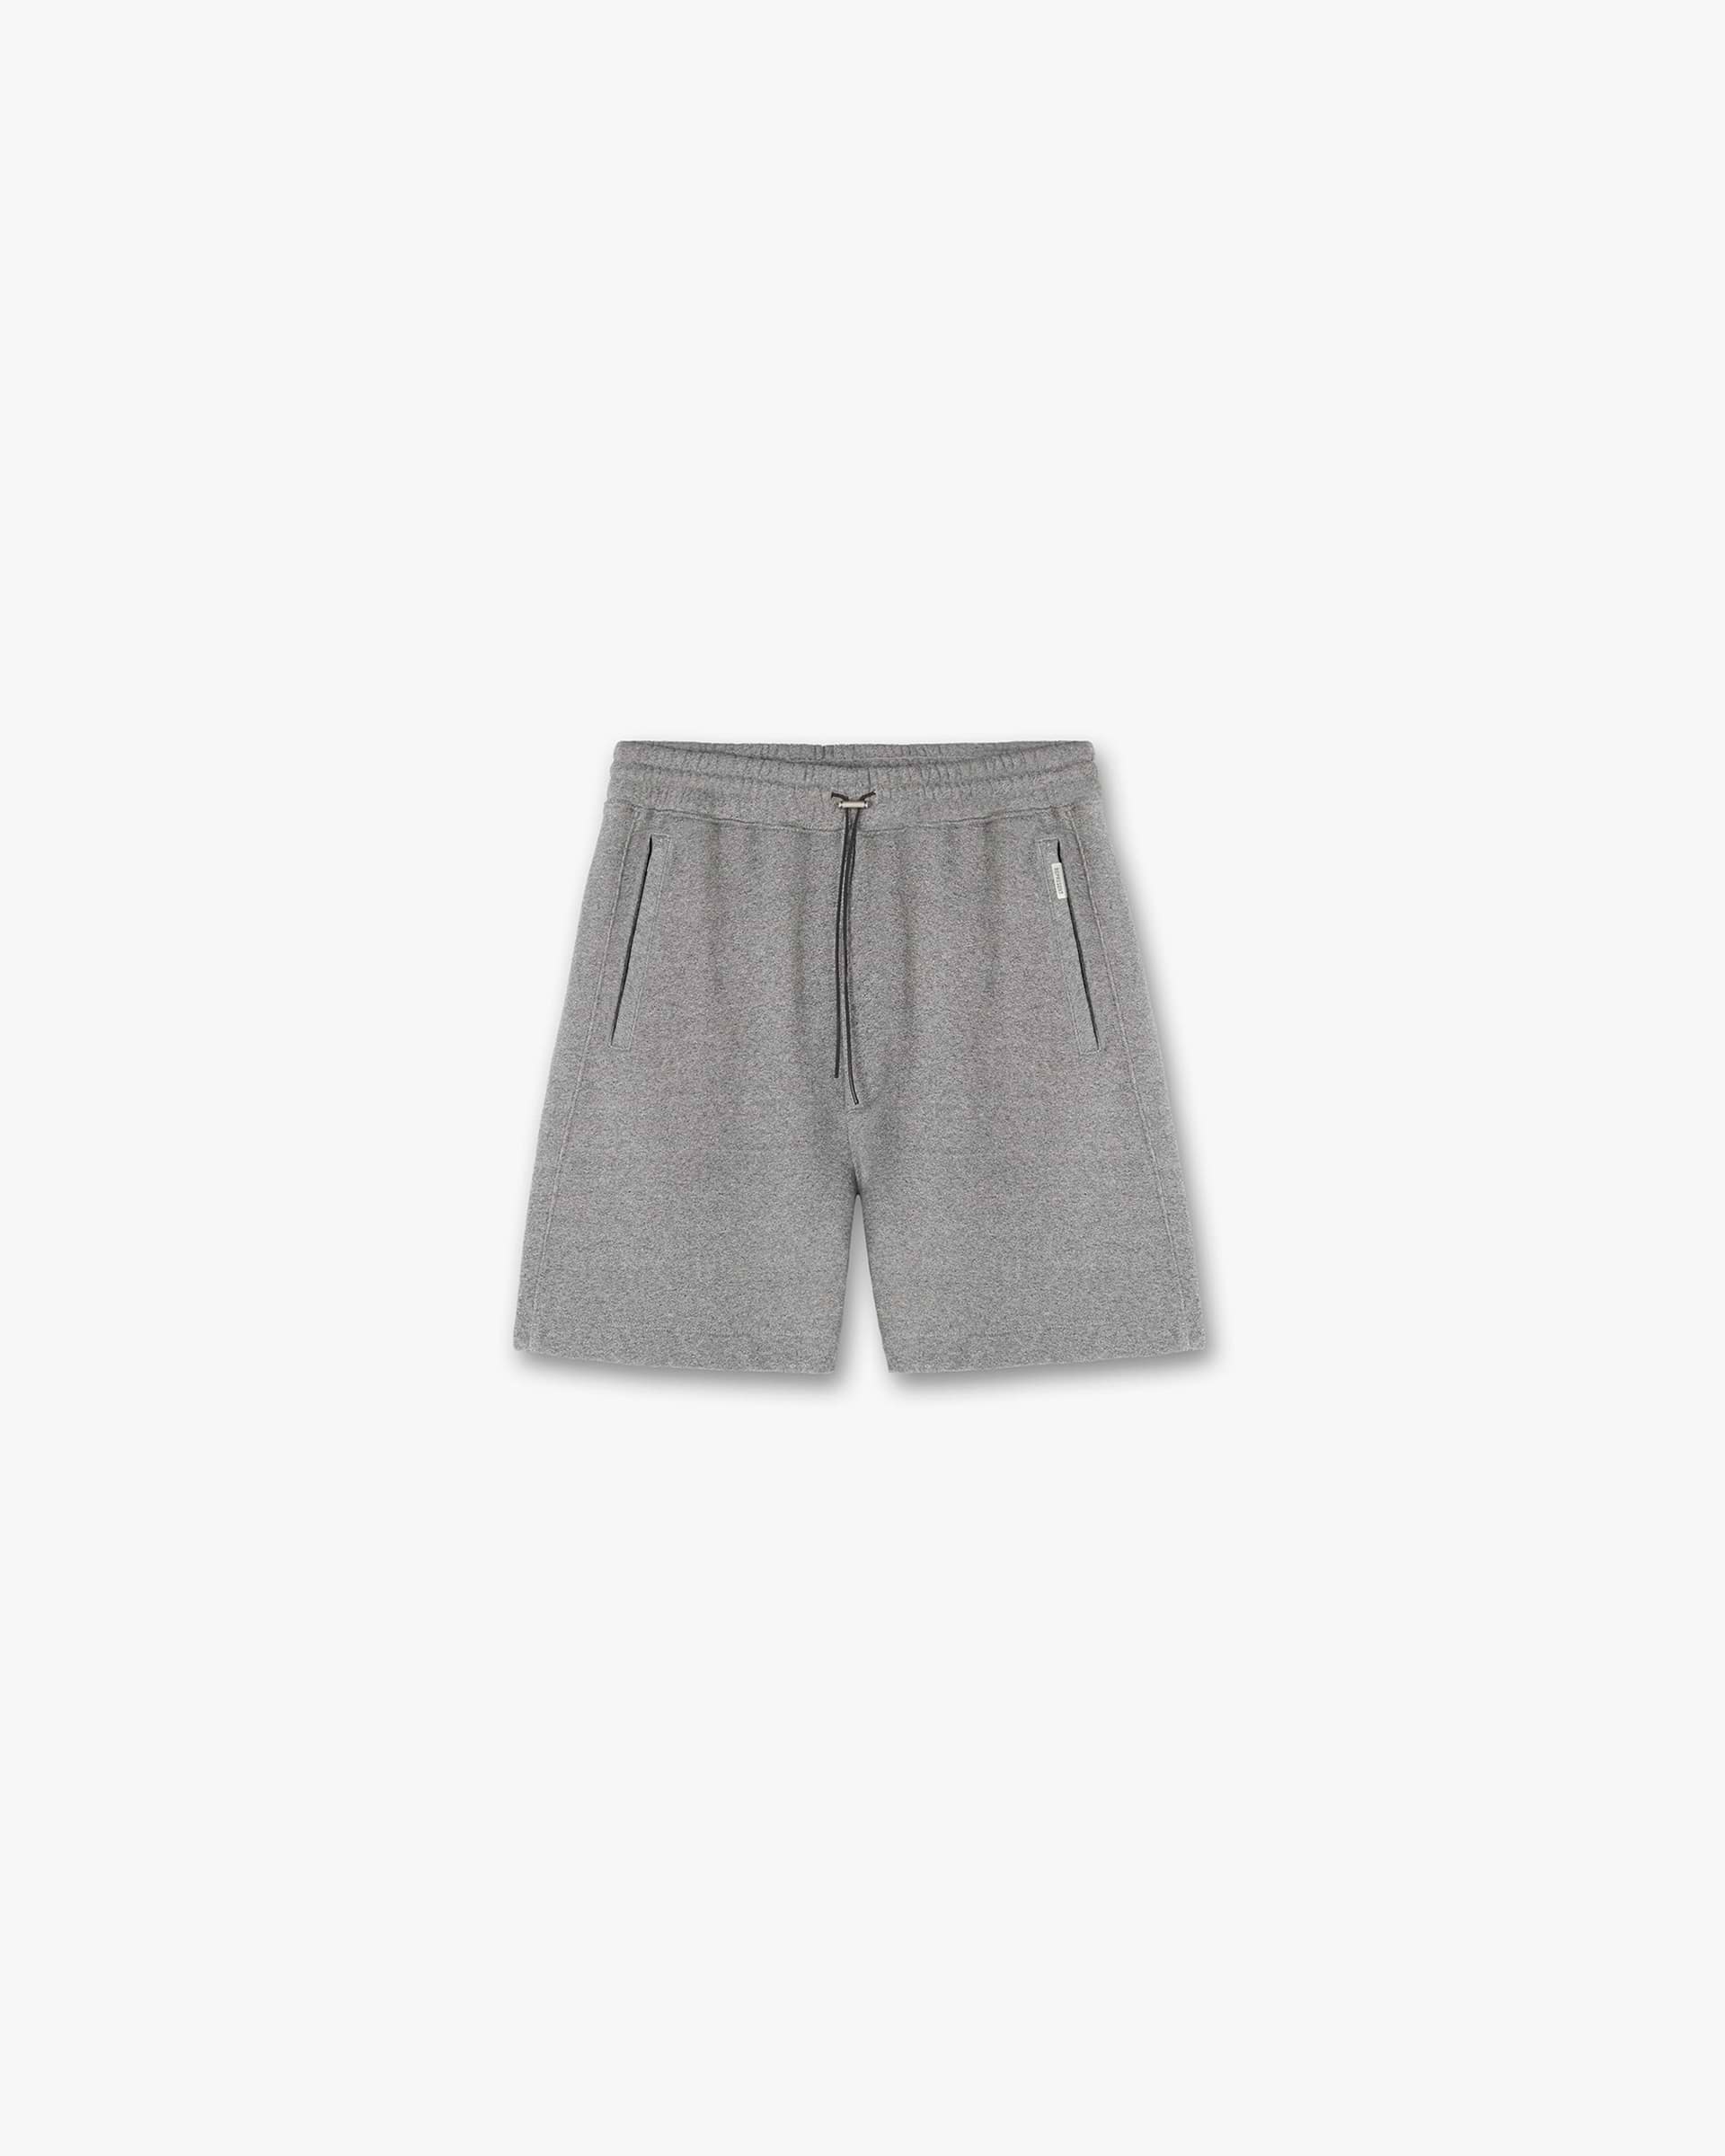 Blank Shorts - Grey Melange